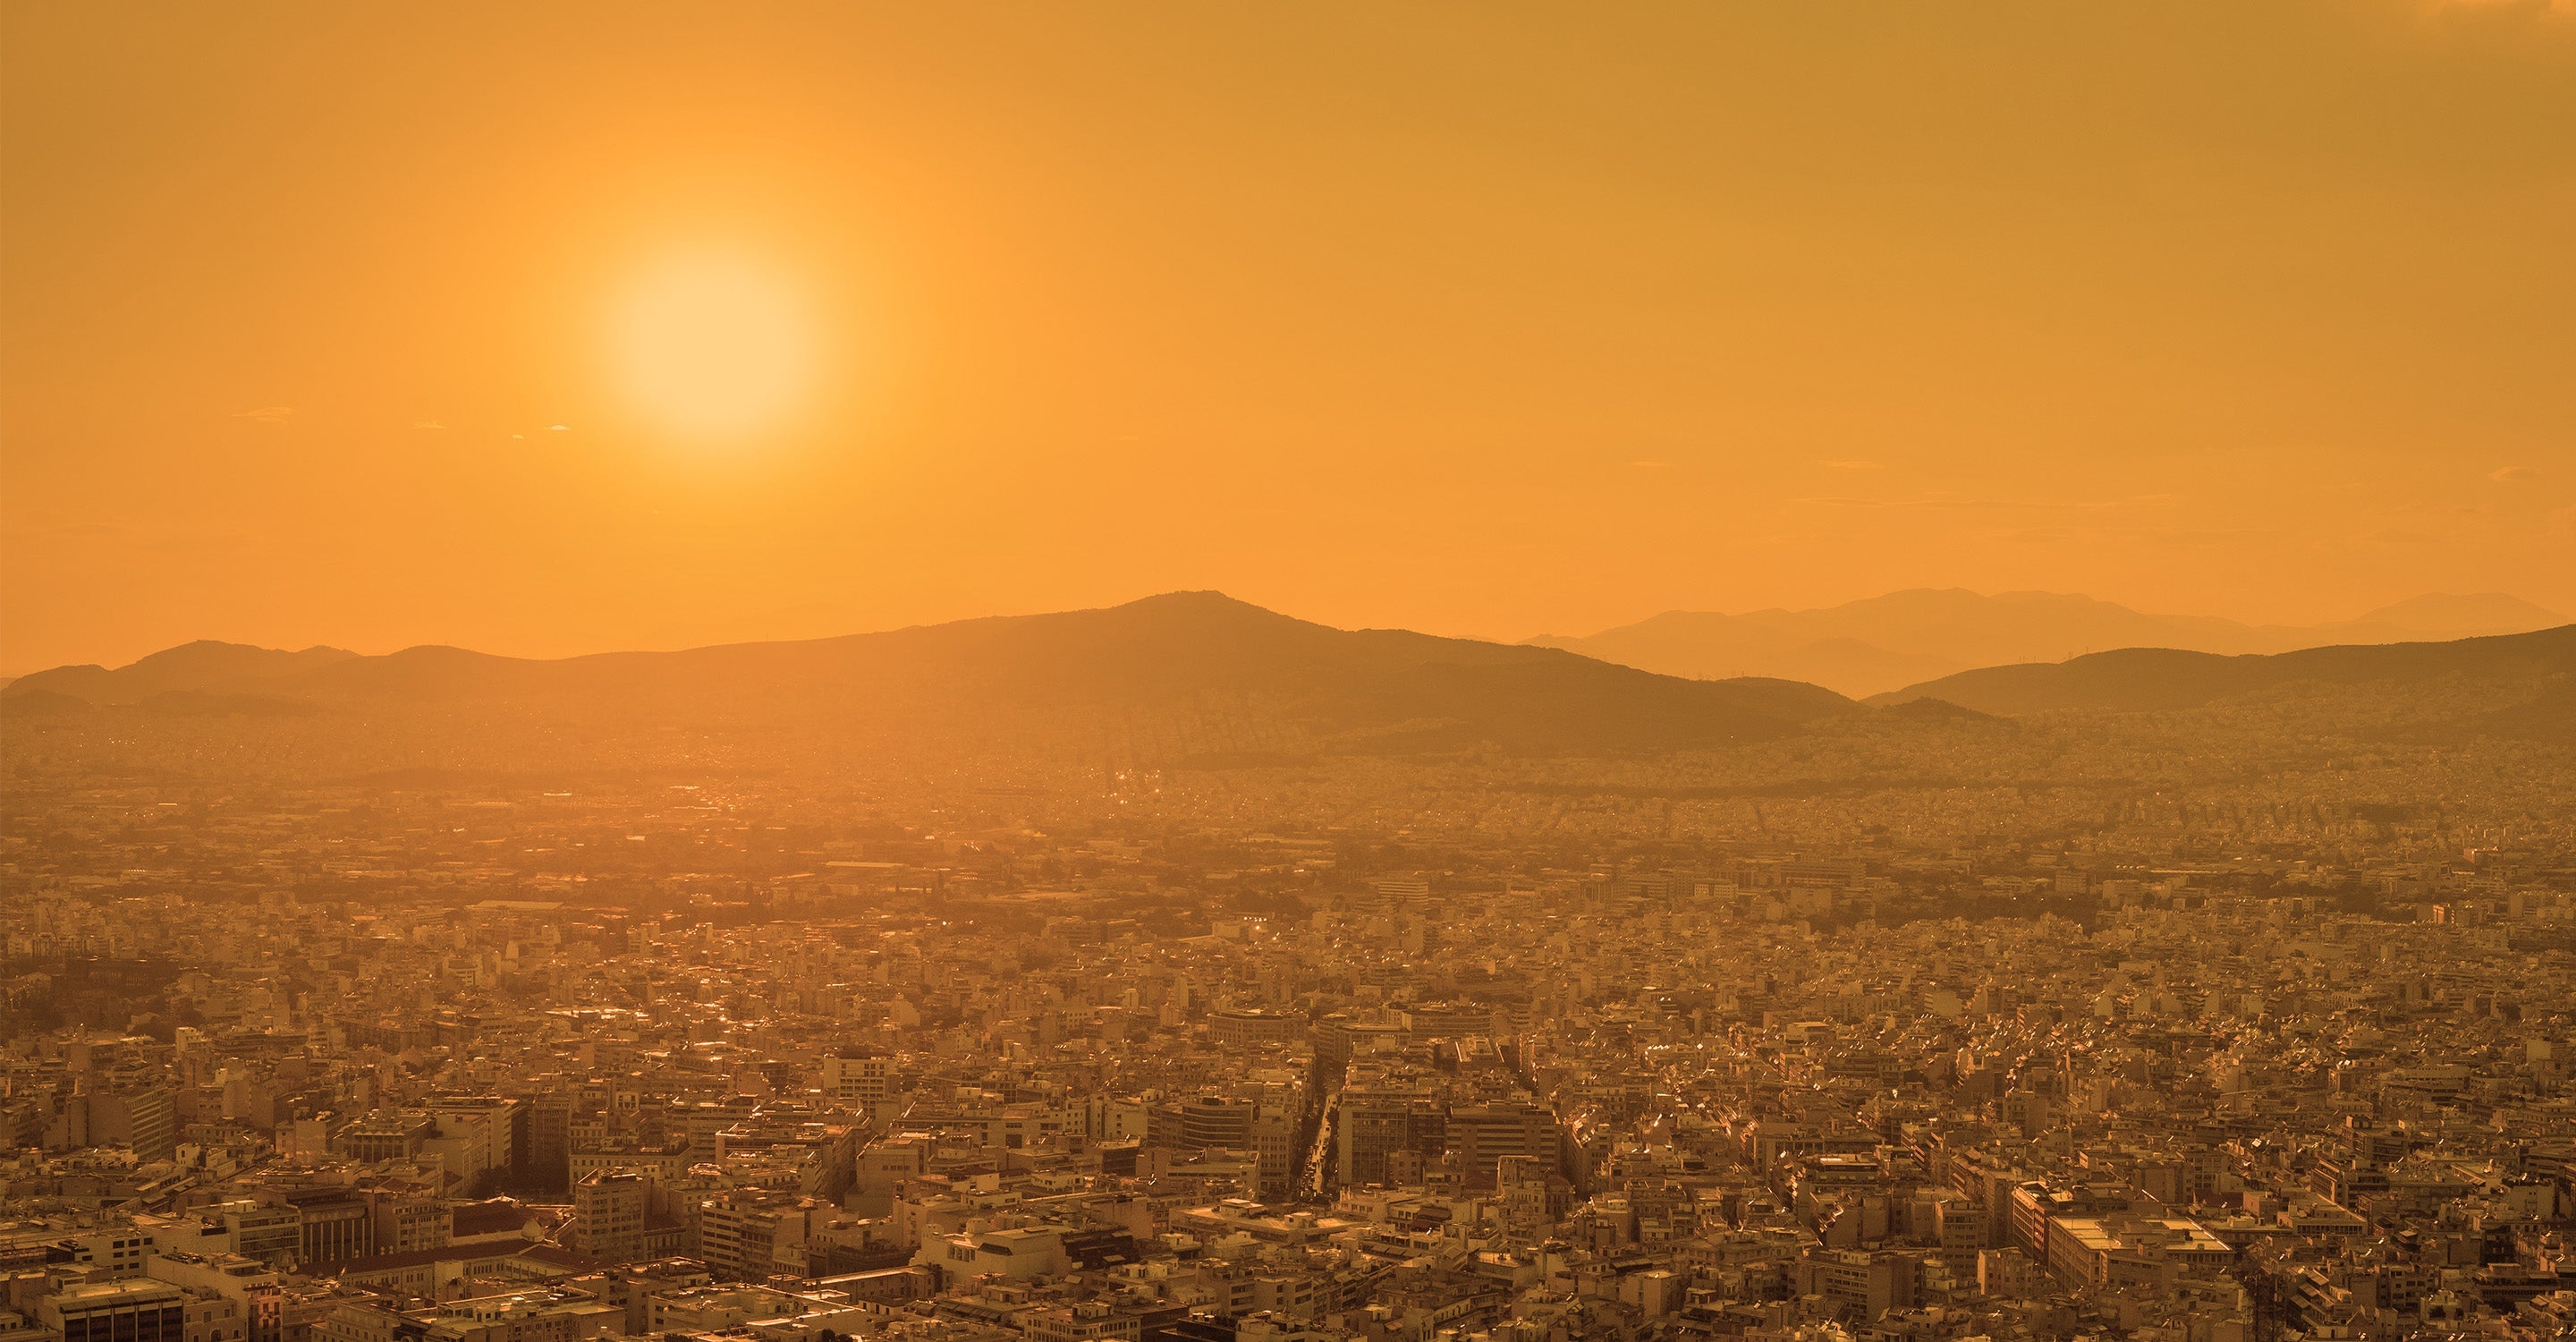 標題為Greece Air Quality Alert: Orange skies over Athens的新聞縮略圖